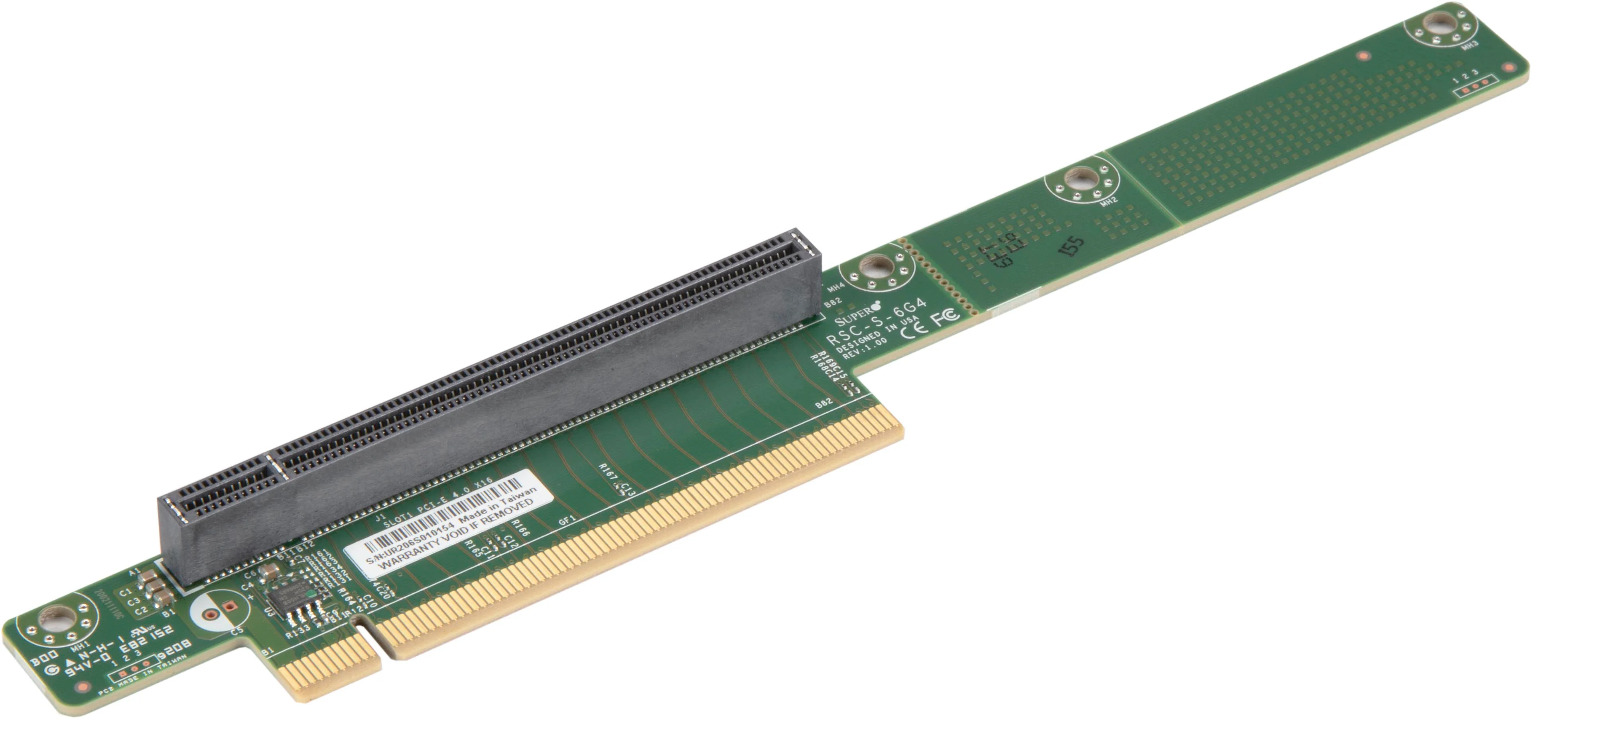 Supermicro RSC-S-6G4 1U LHS Standard riser card with one PCI-E 4.0 x16 slot